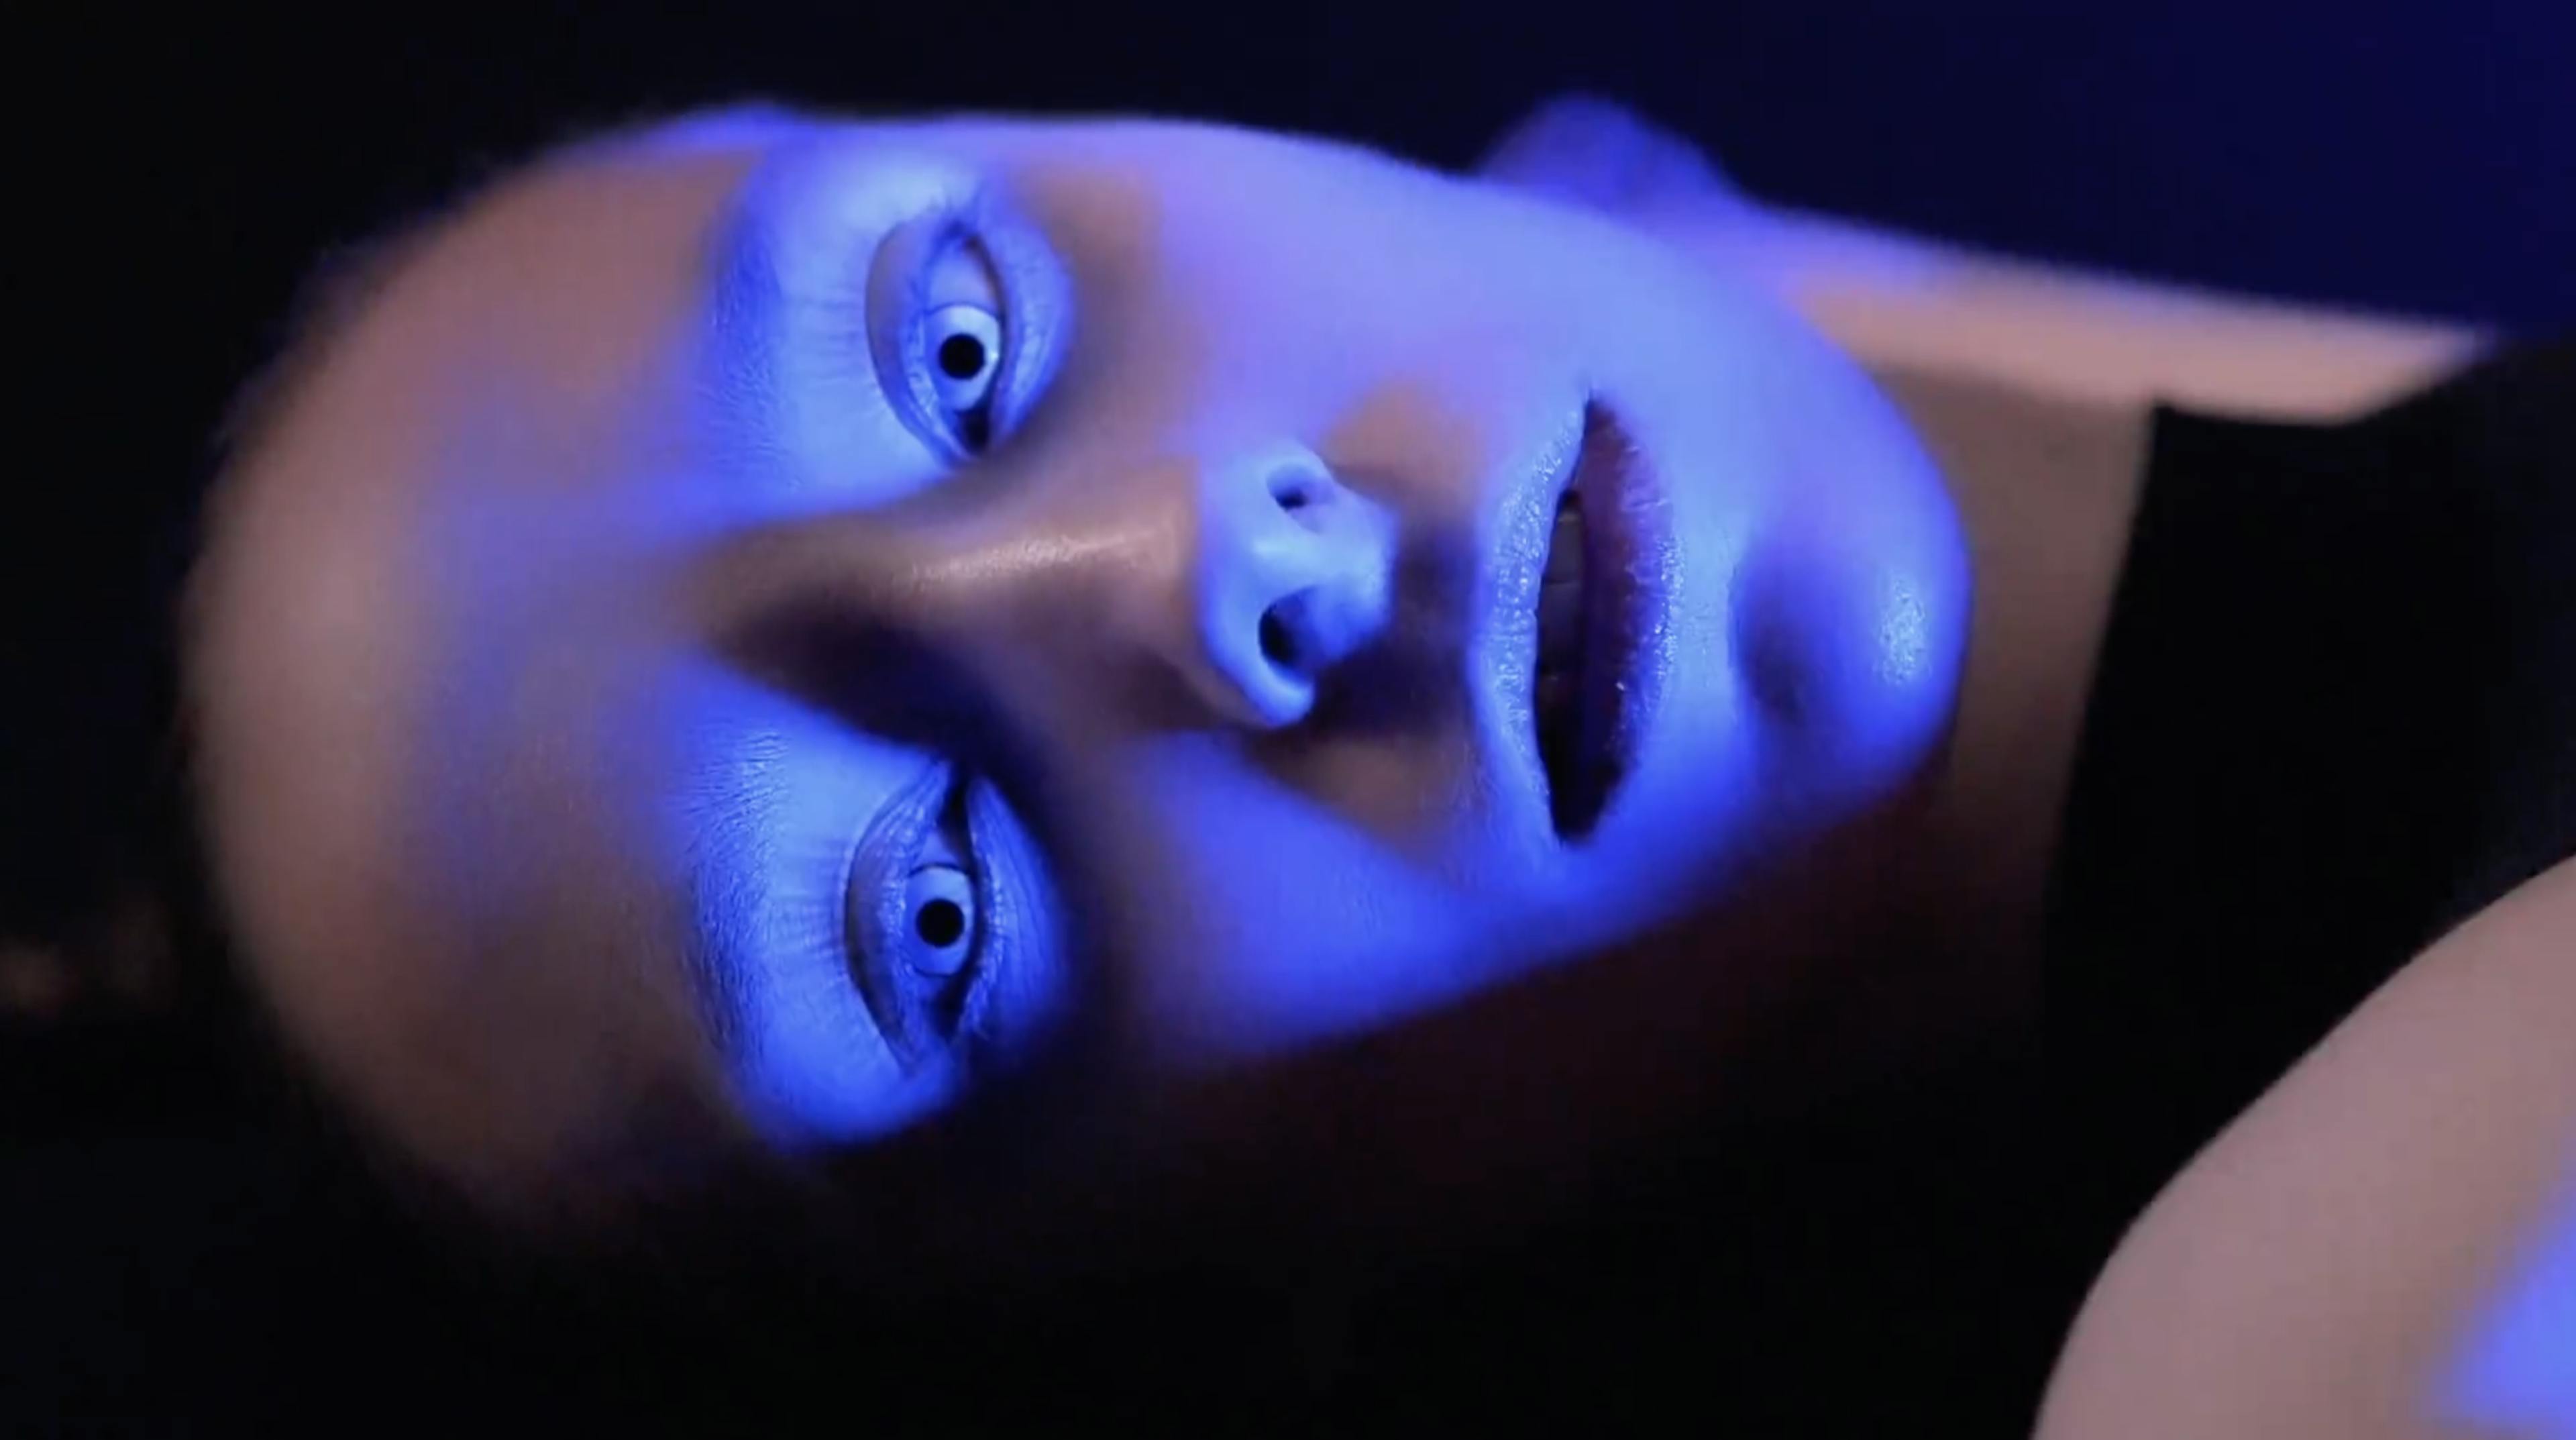 Photograph of a blue lit woman